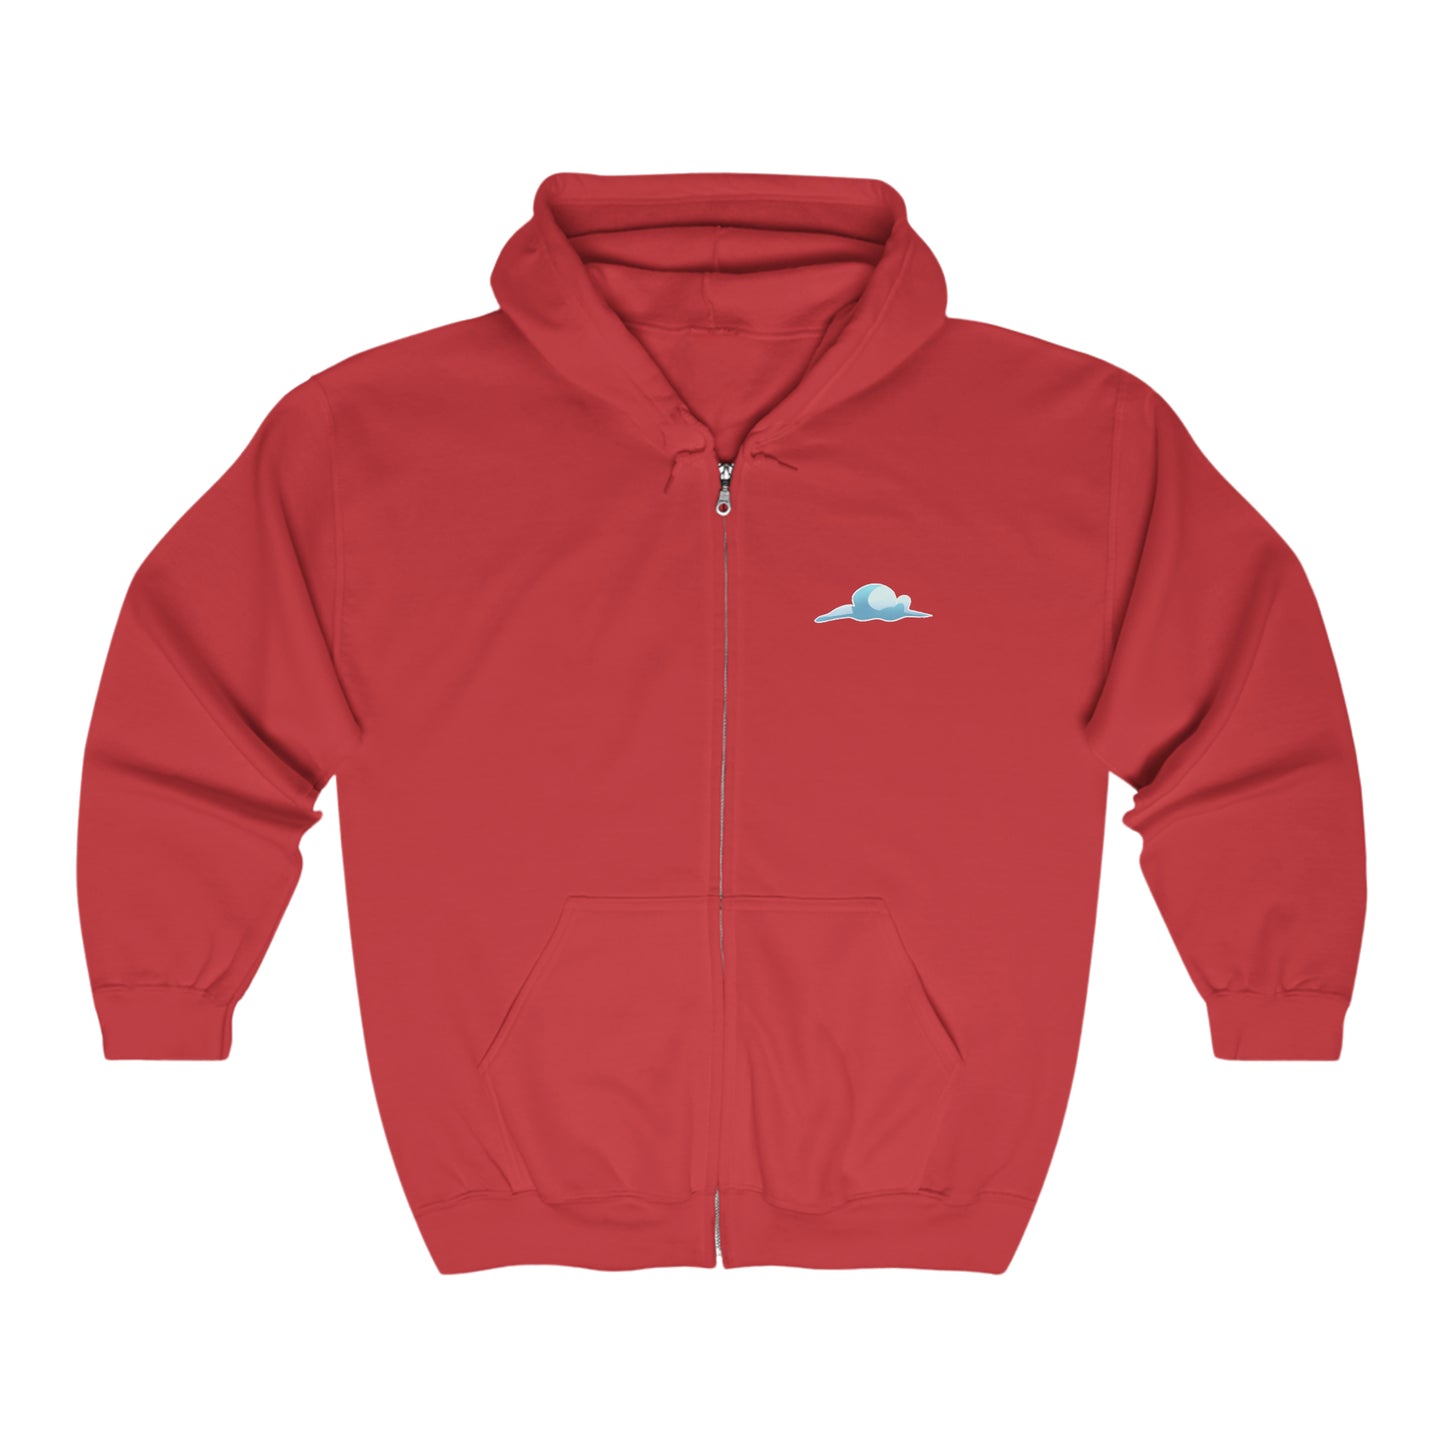 Cloud - Unisex Heavy Blend™ Full Zip Hooded Sweatshirt